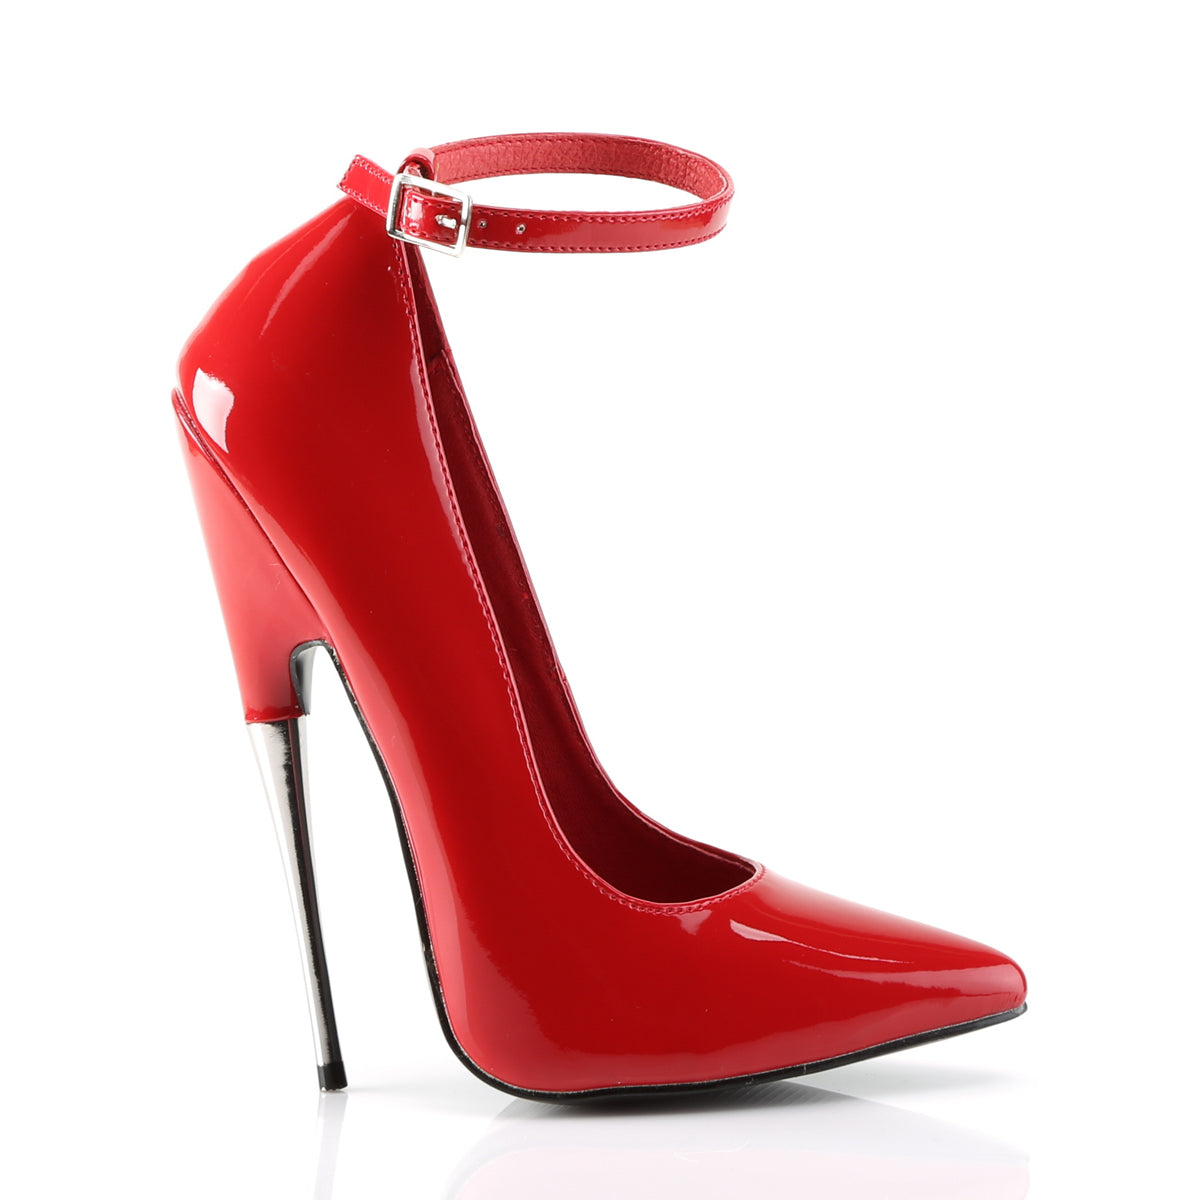 SCREAM-12 Devious Heels Red Patent Single Soles [Fetish Heels]